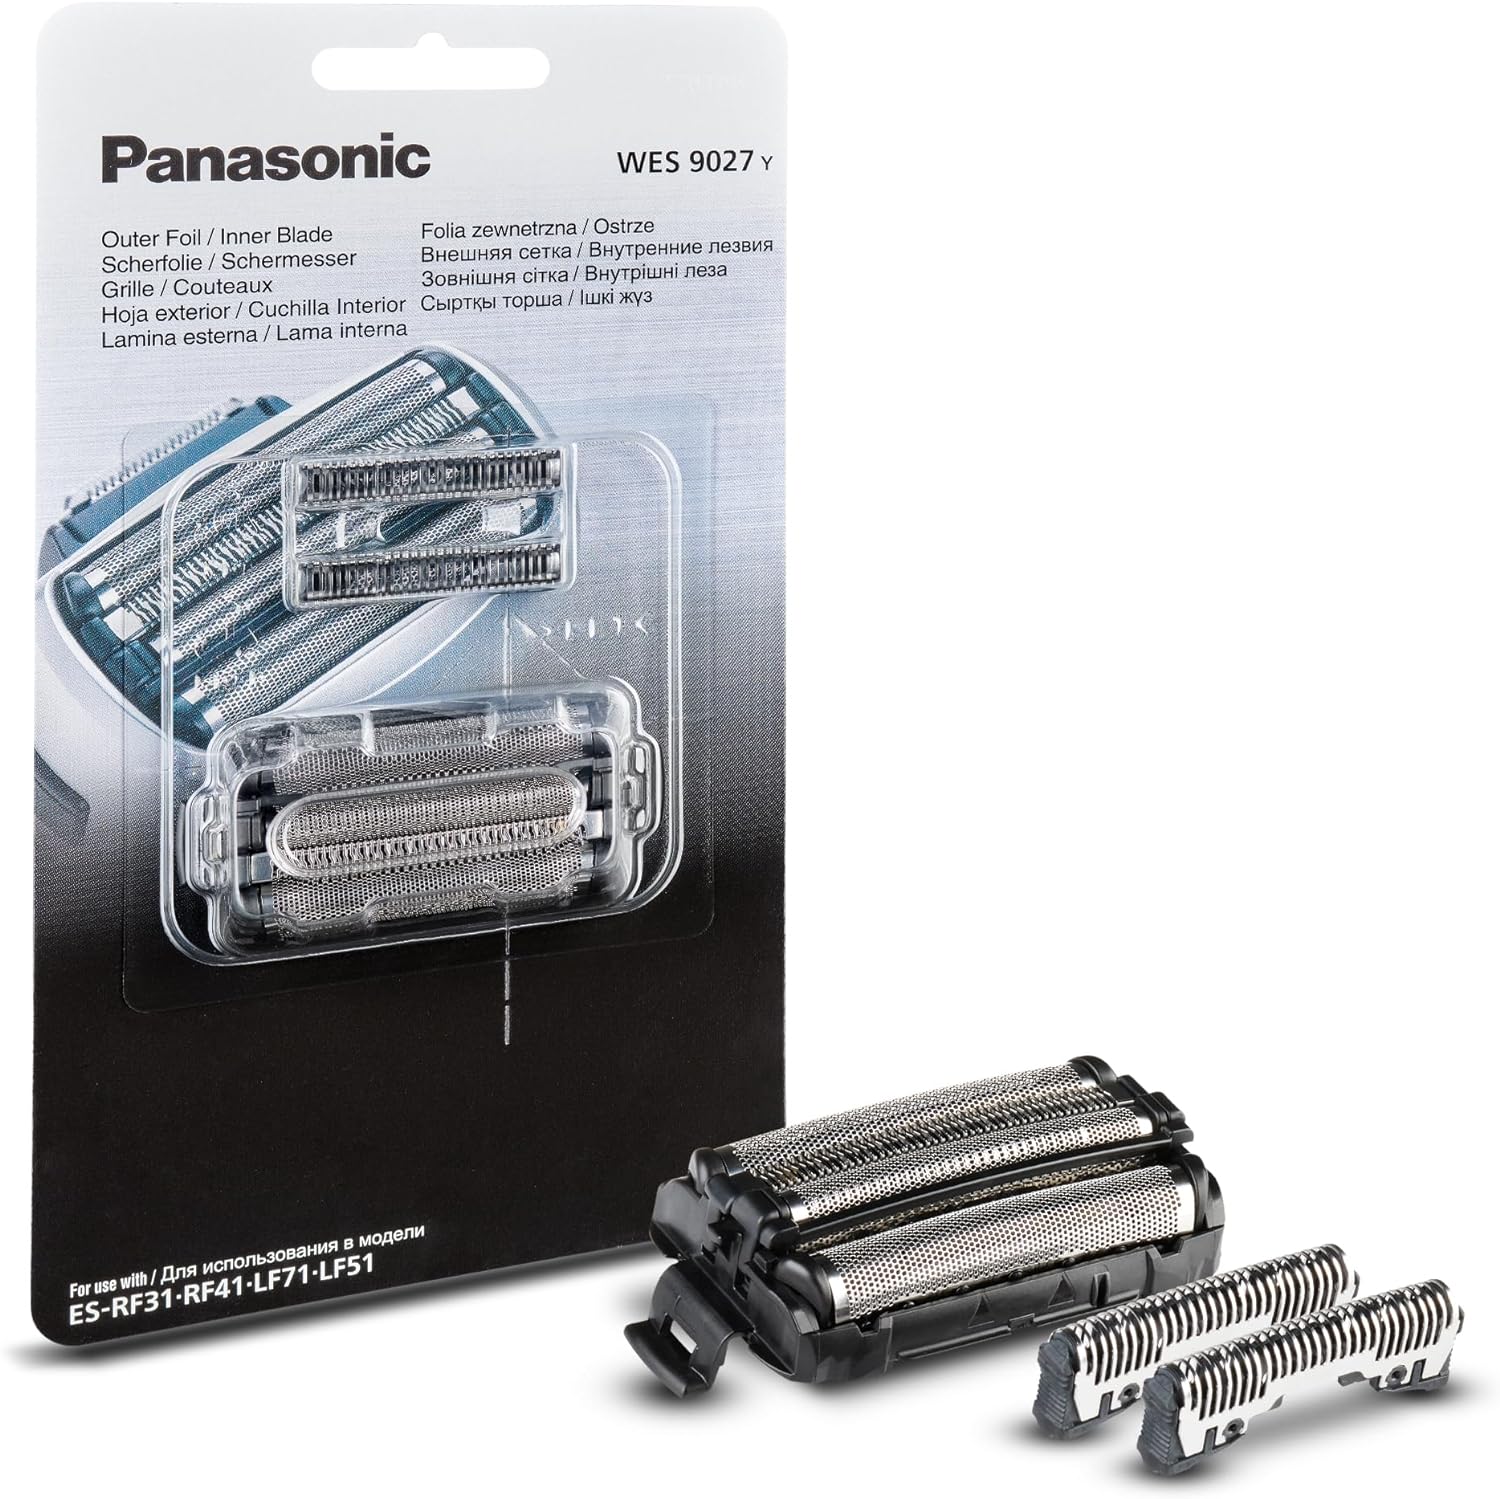 Panasonic WES 9027